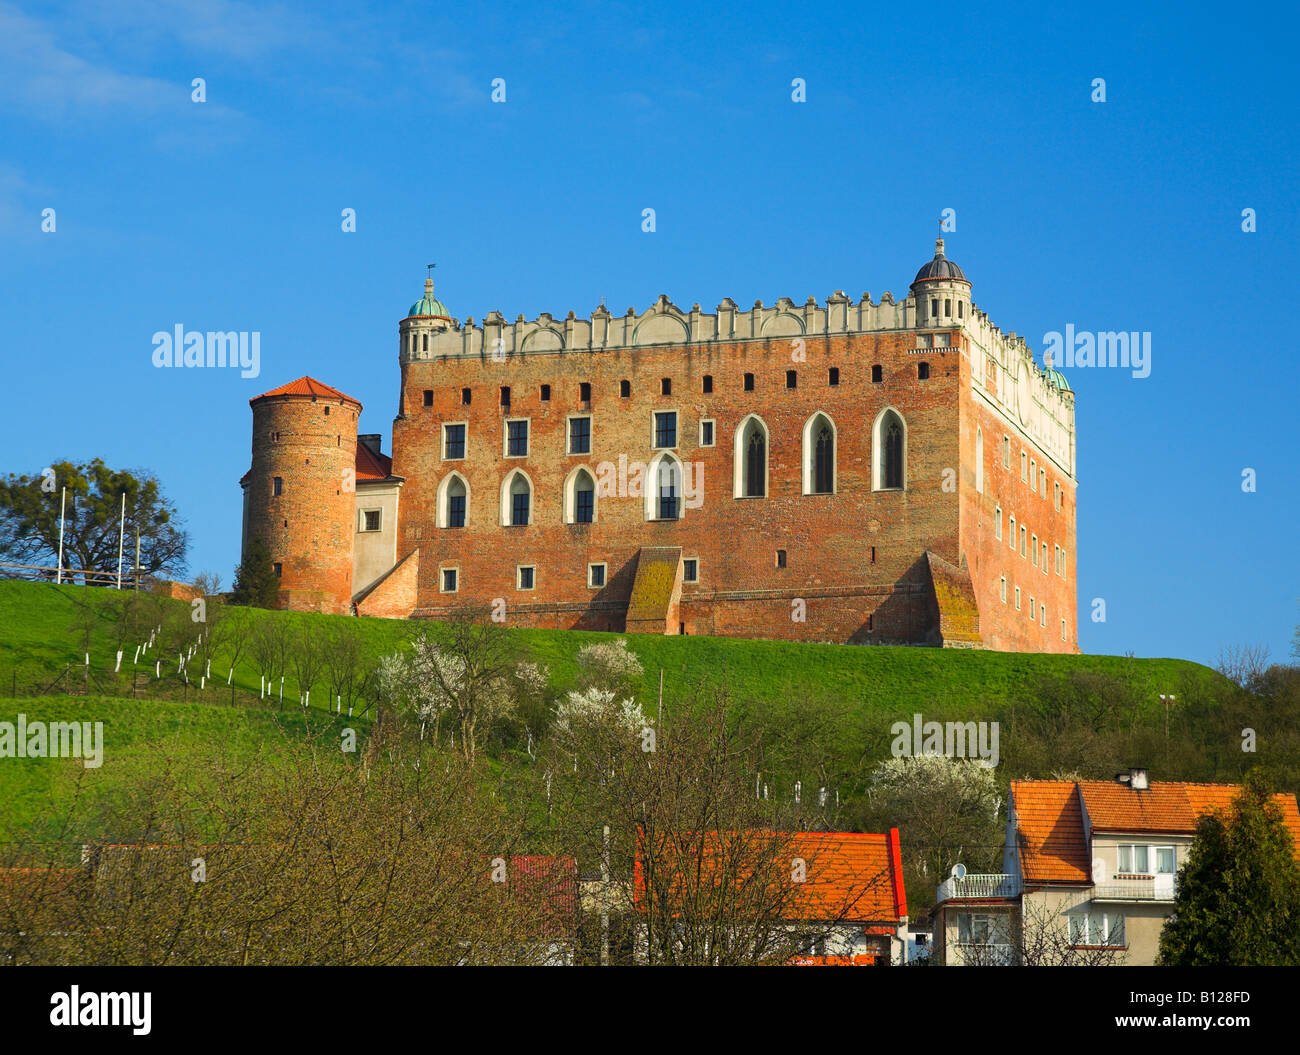 The castle in Golub Dobrzyn Poland Stock Photo